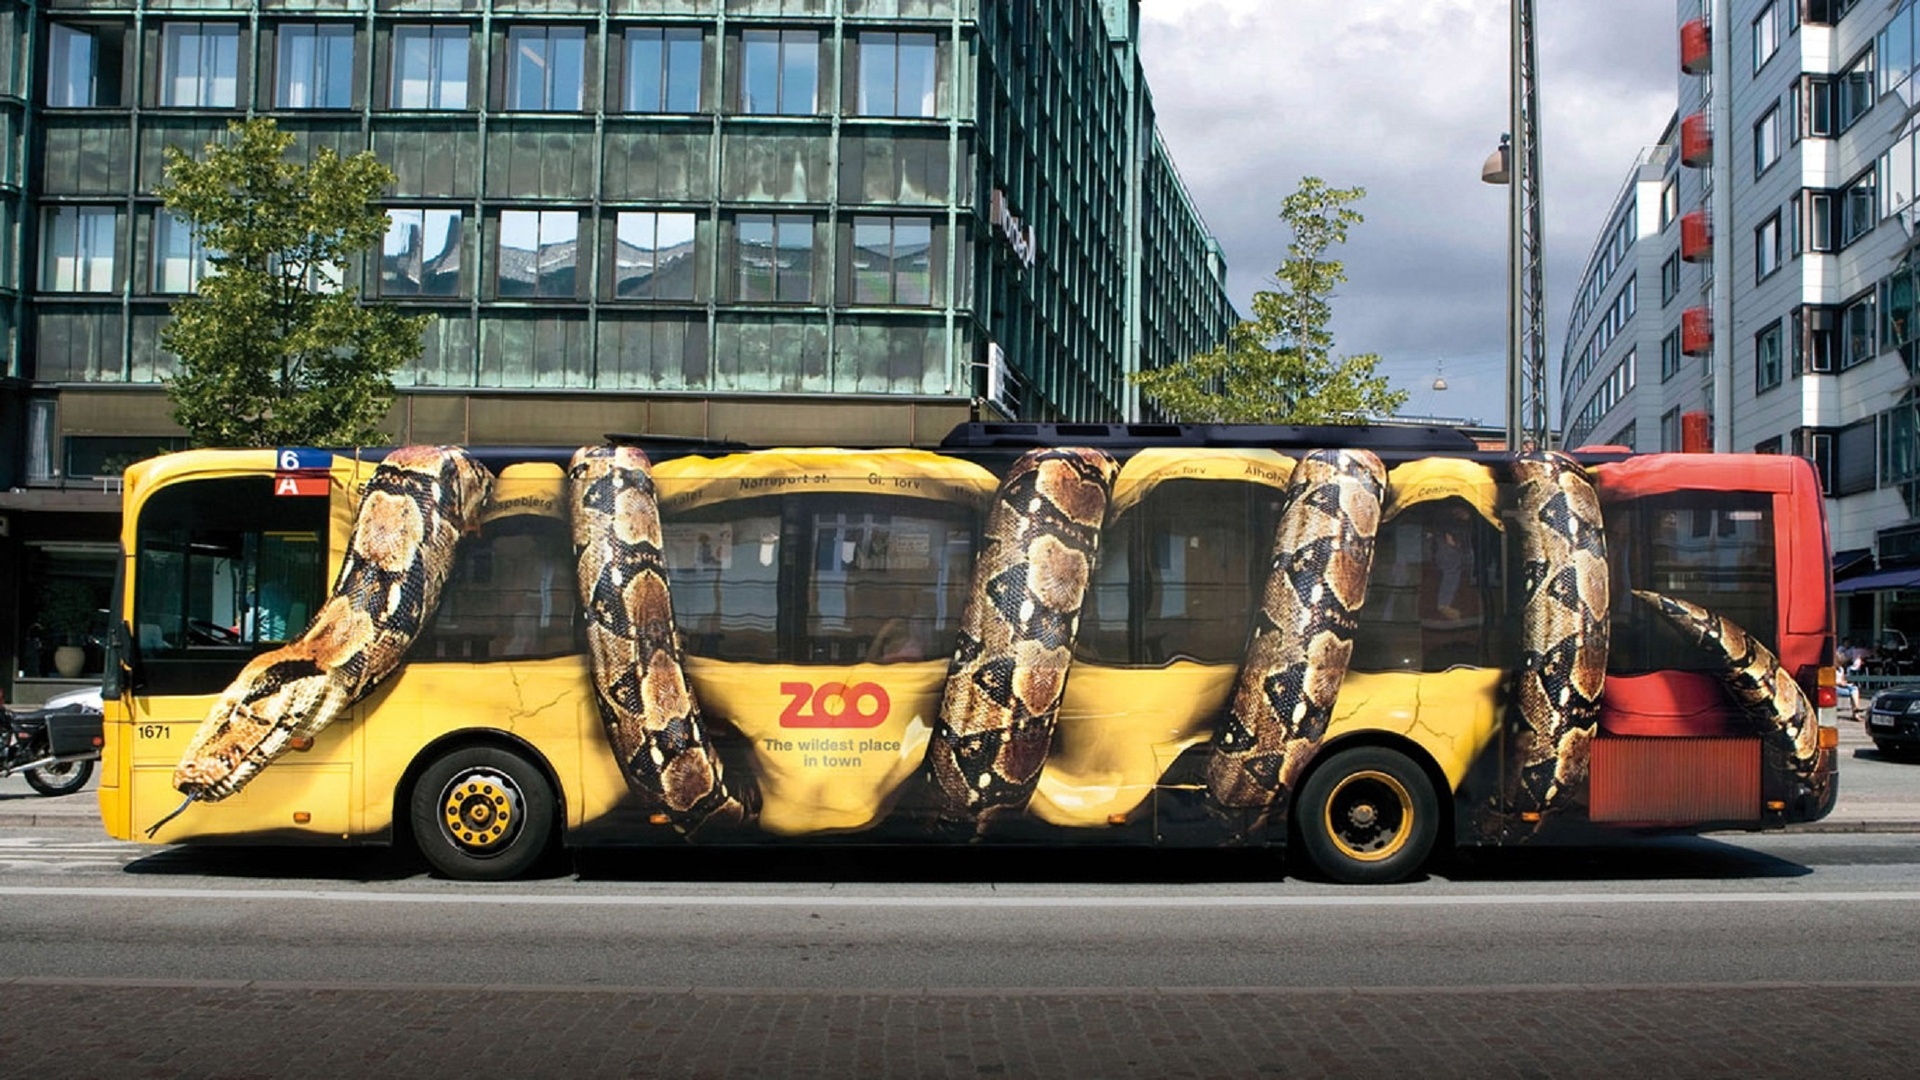 Реклама на транспорте